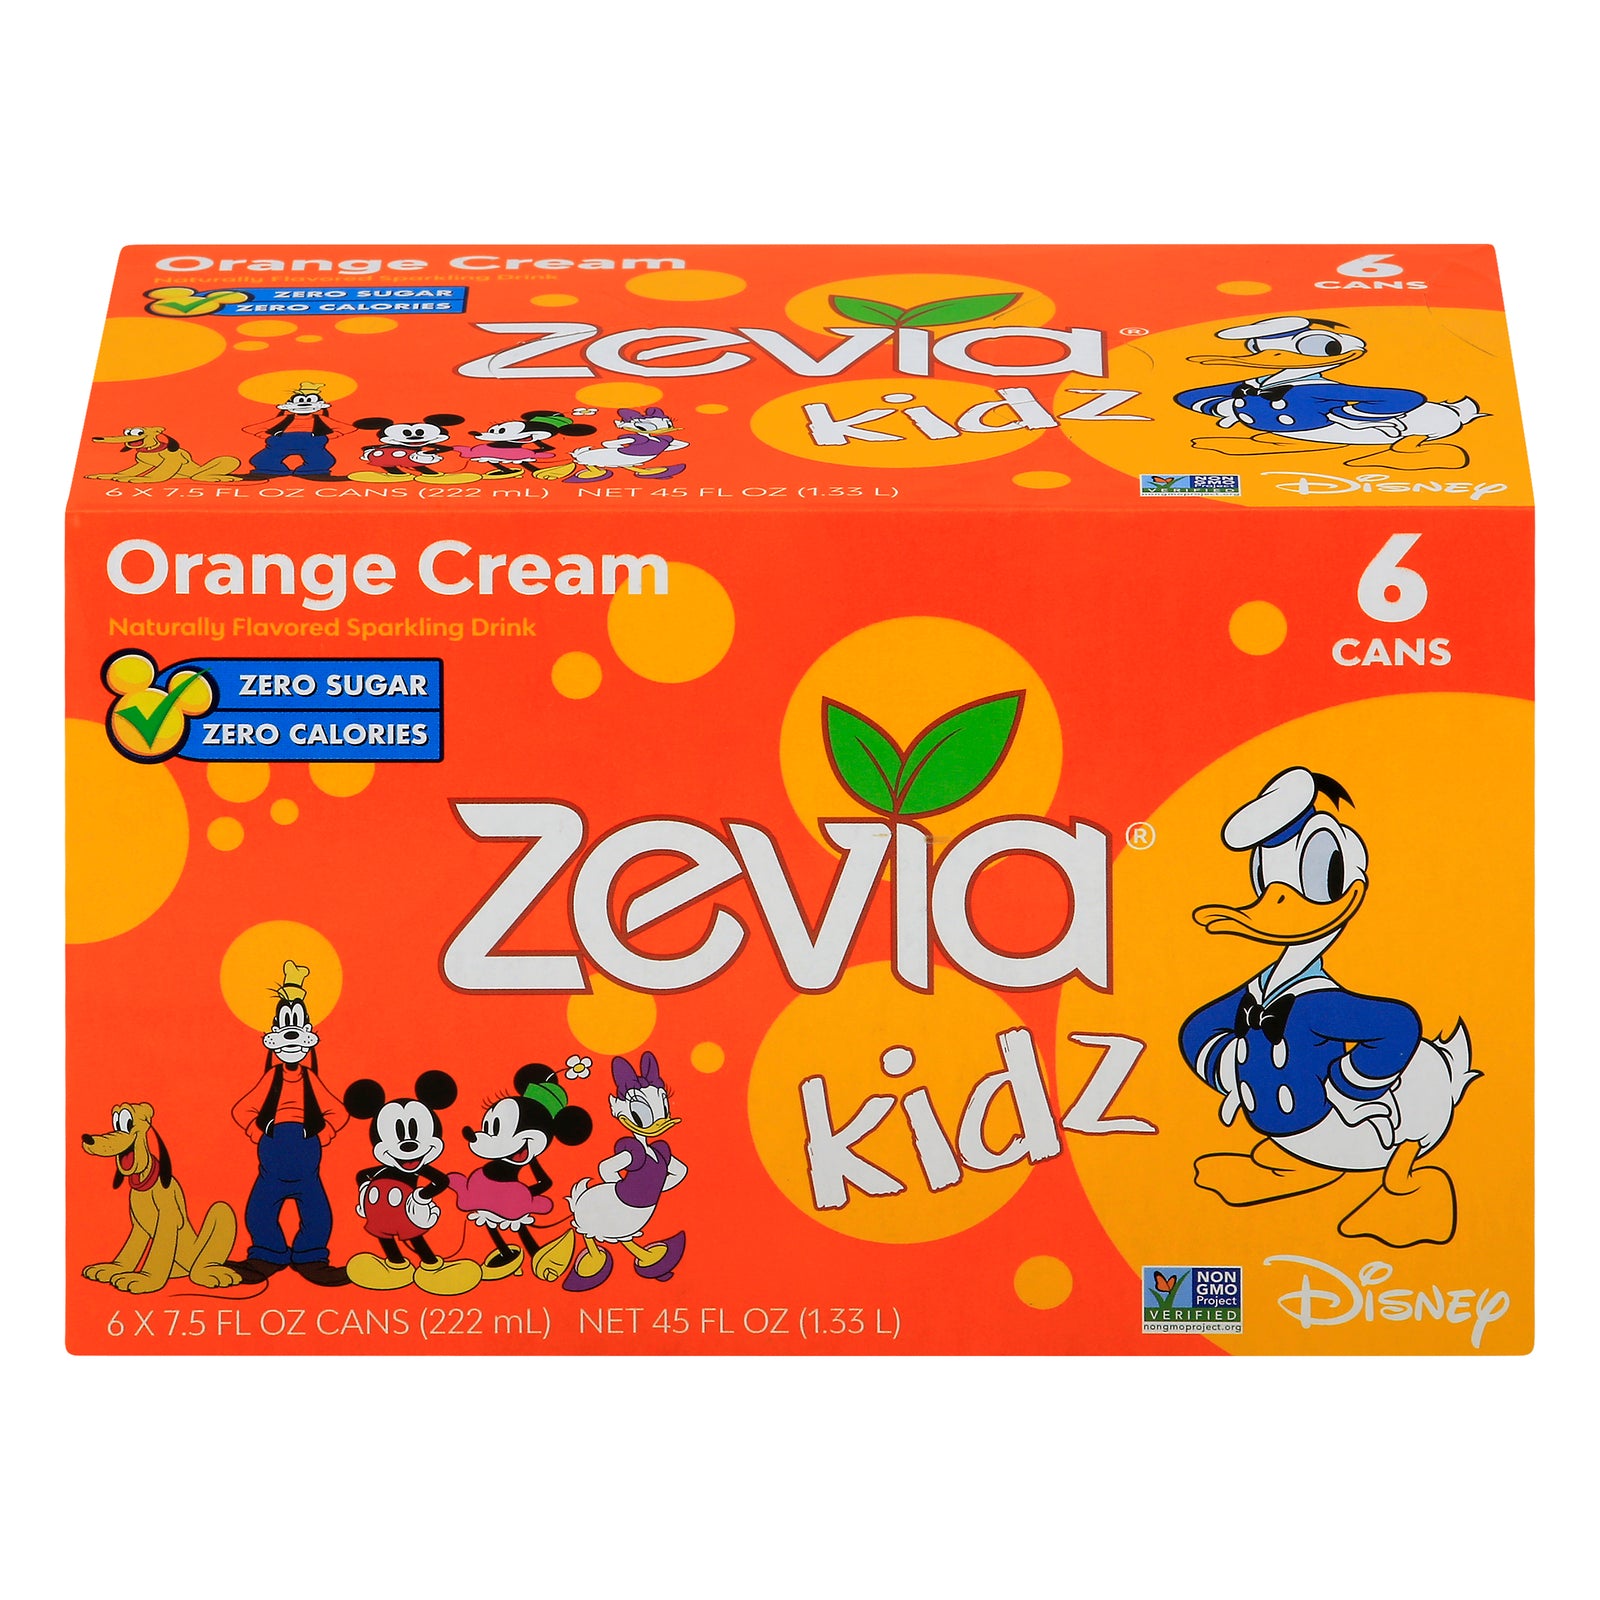 Zevia - Kidz Orangecrm Spark Drink - Case of 4-6/7.5 FZ